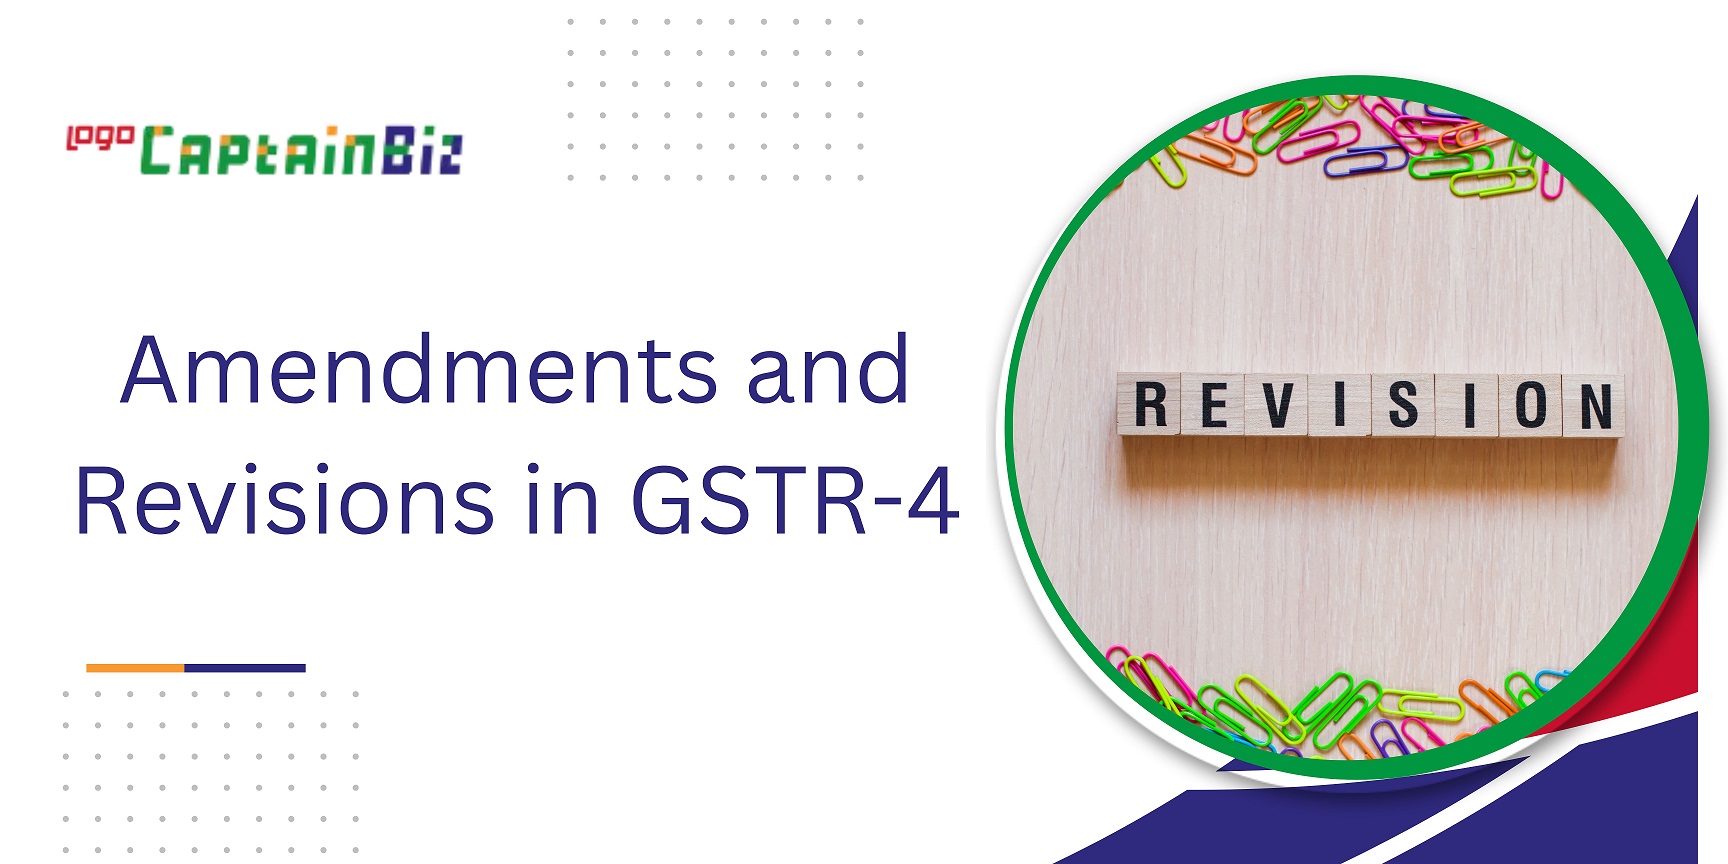 CaotainBiz: Amendments and Revisions in GSTR-4